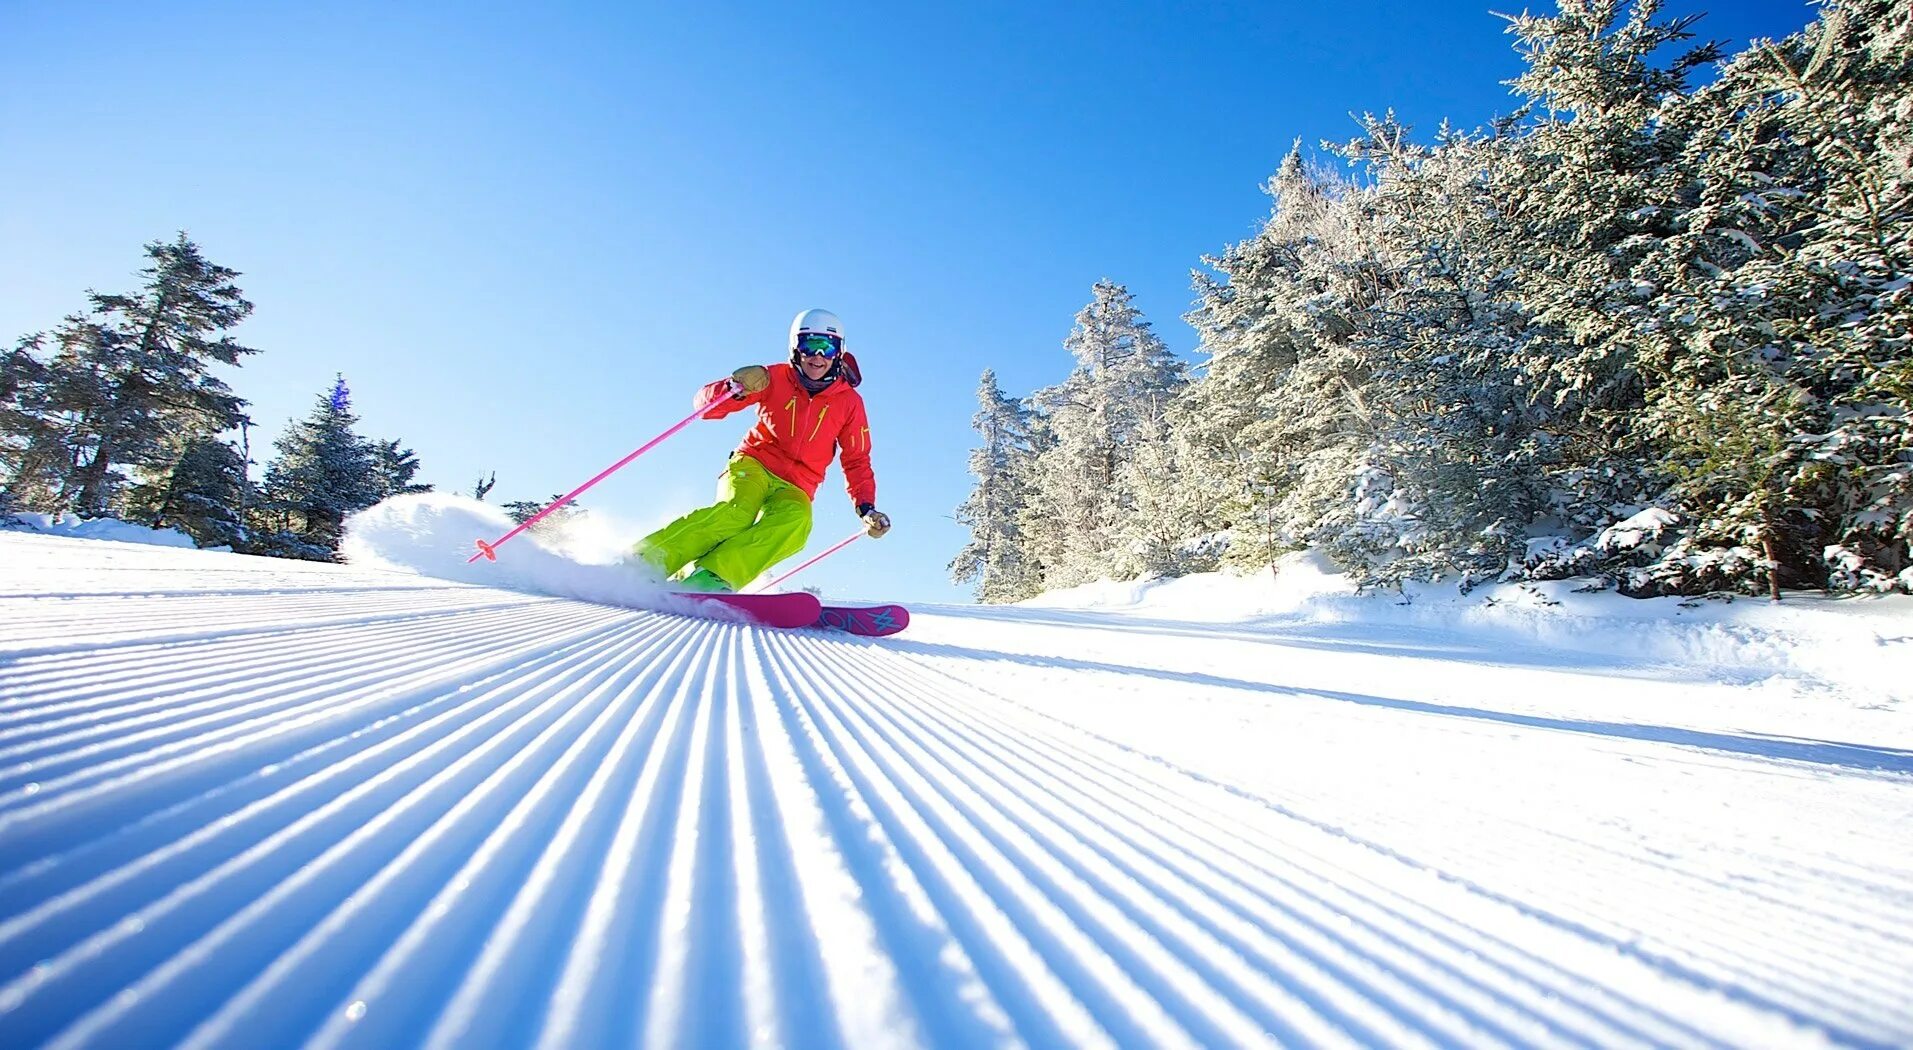 We like skiing. Лыжники красная Поляна. Красная Поляна вельвет лыжи. Катание на горных лыжах. Горы лыжи.